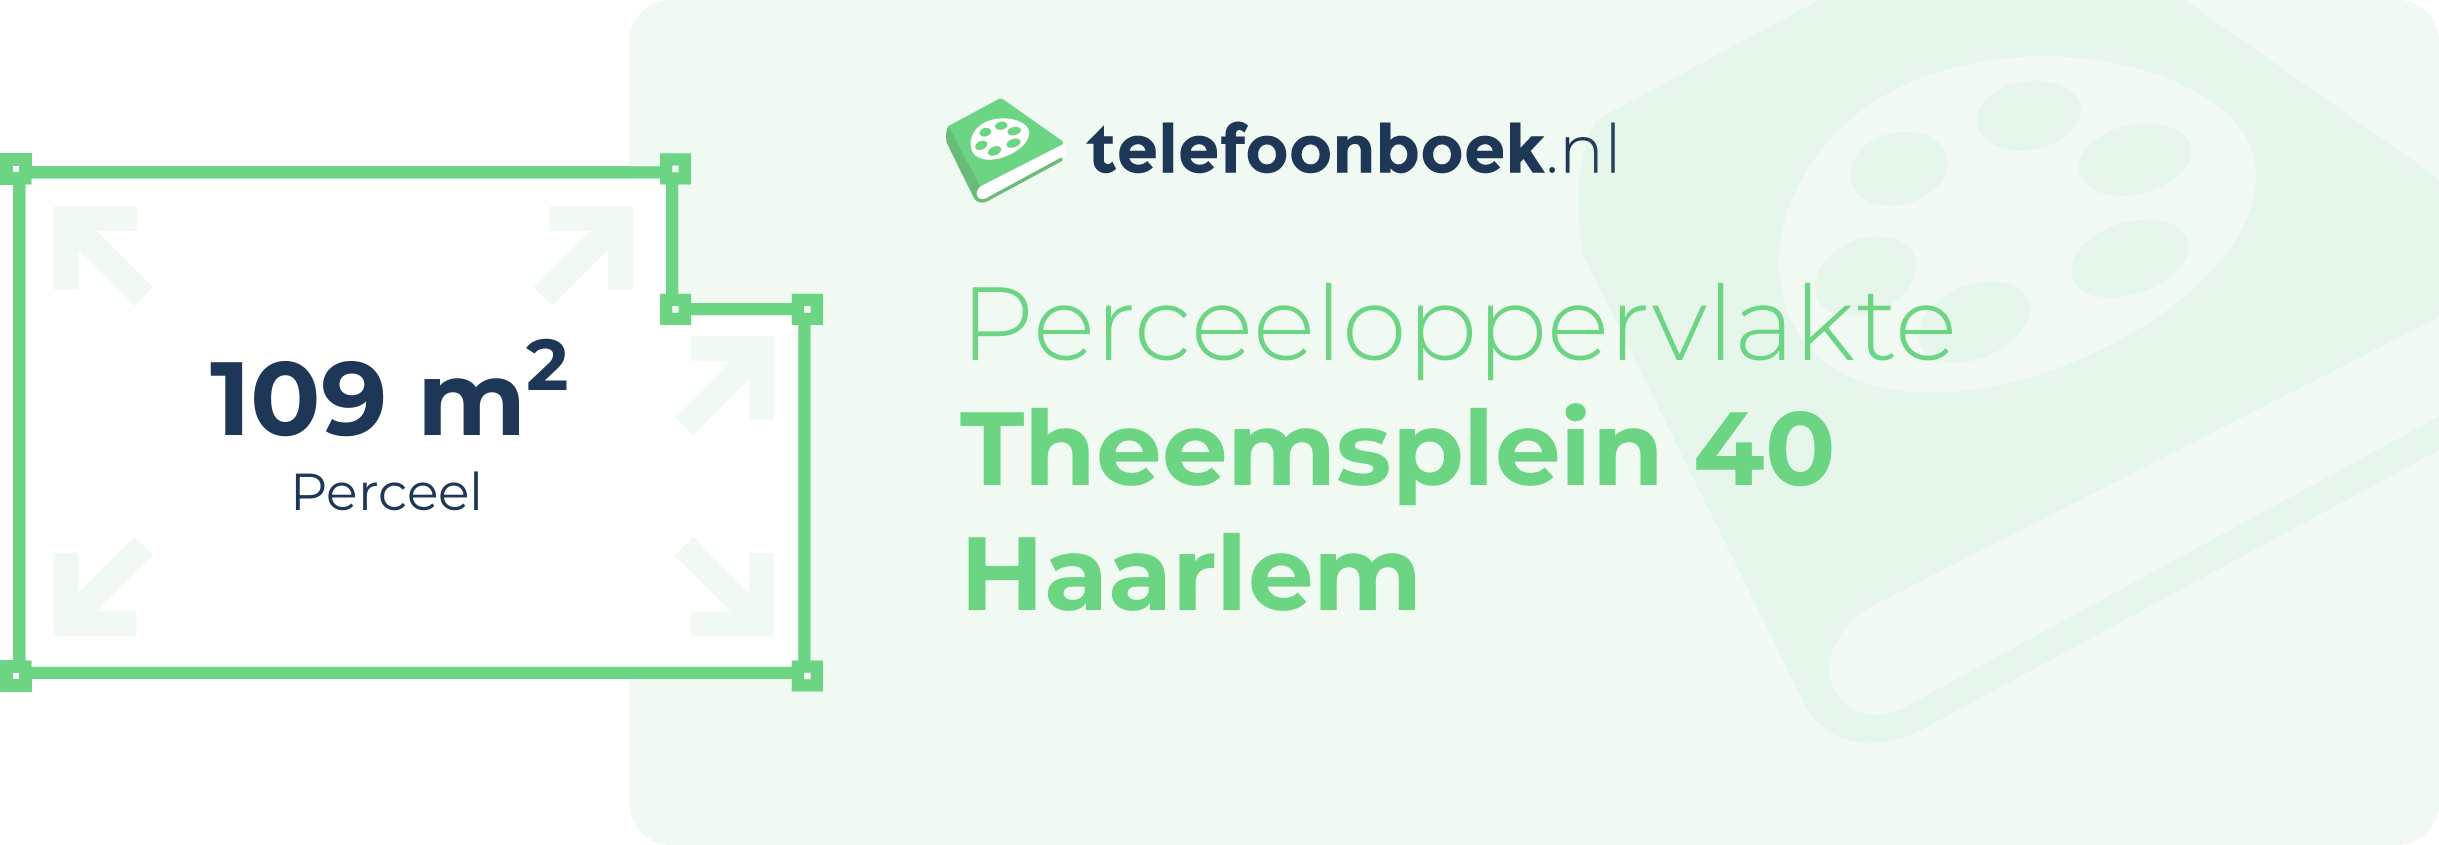 Perceeloppervlakte Theemsplein 40 Haarlem